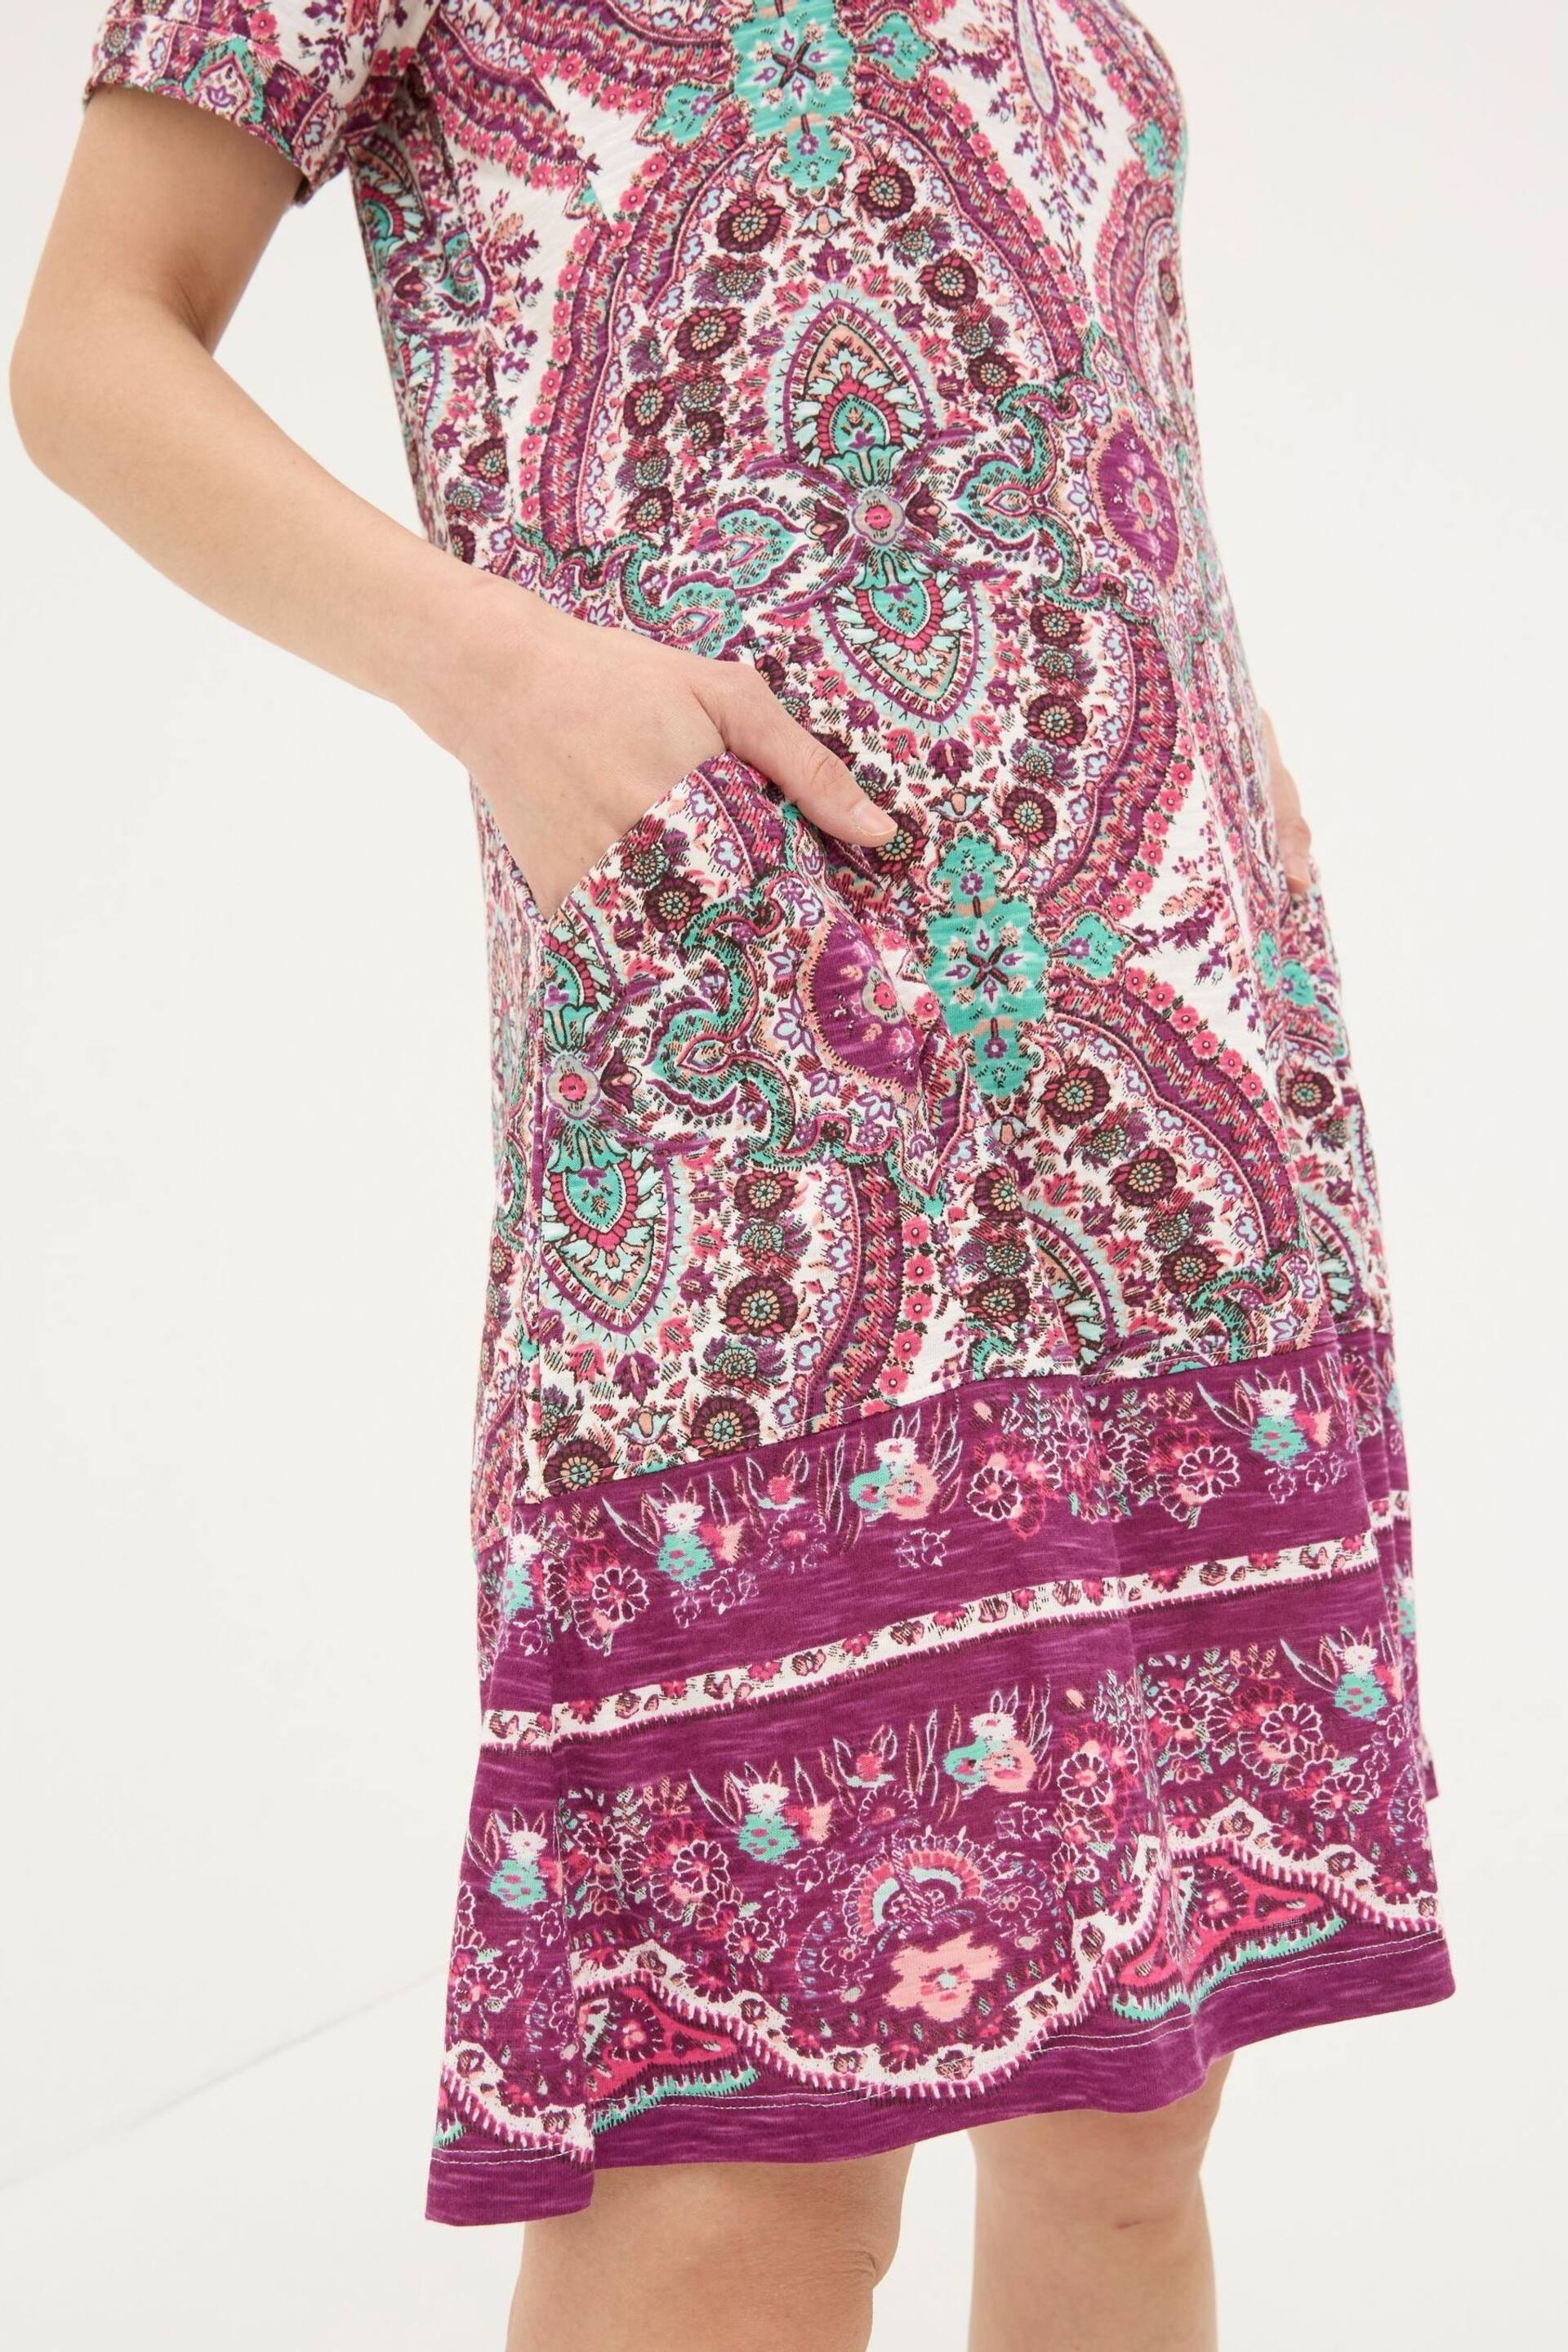 FatFace Purple Simone Detail Paisley Jersey Dress - Image 4 of 5